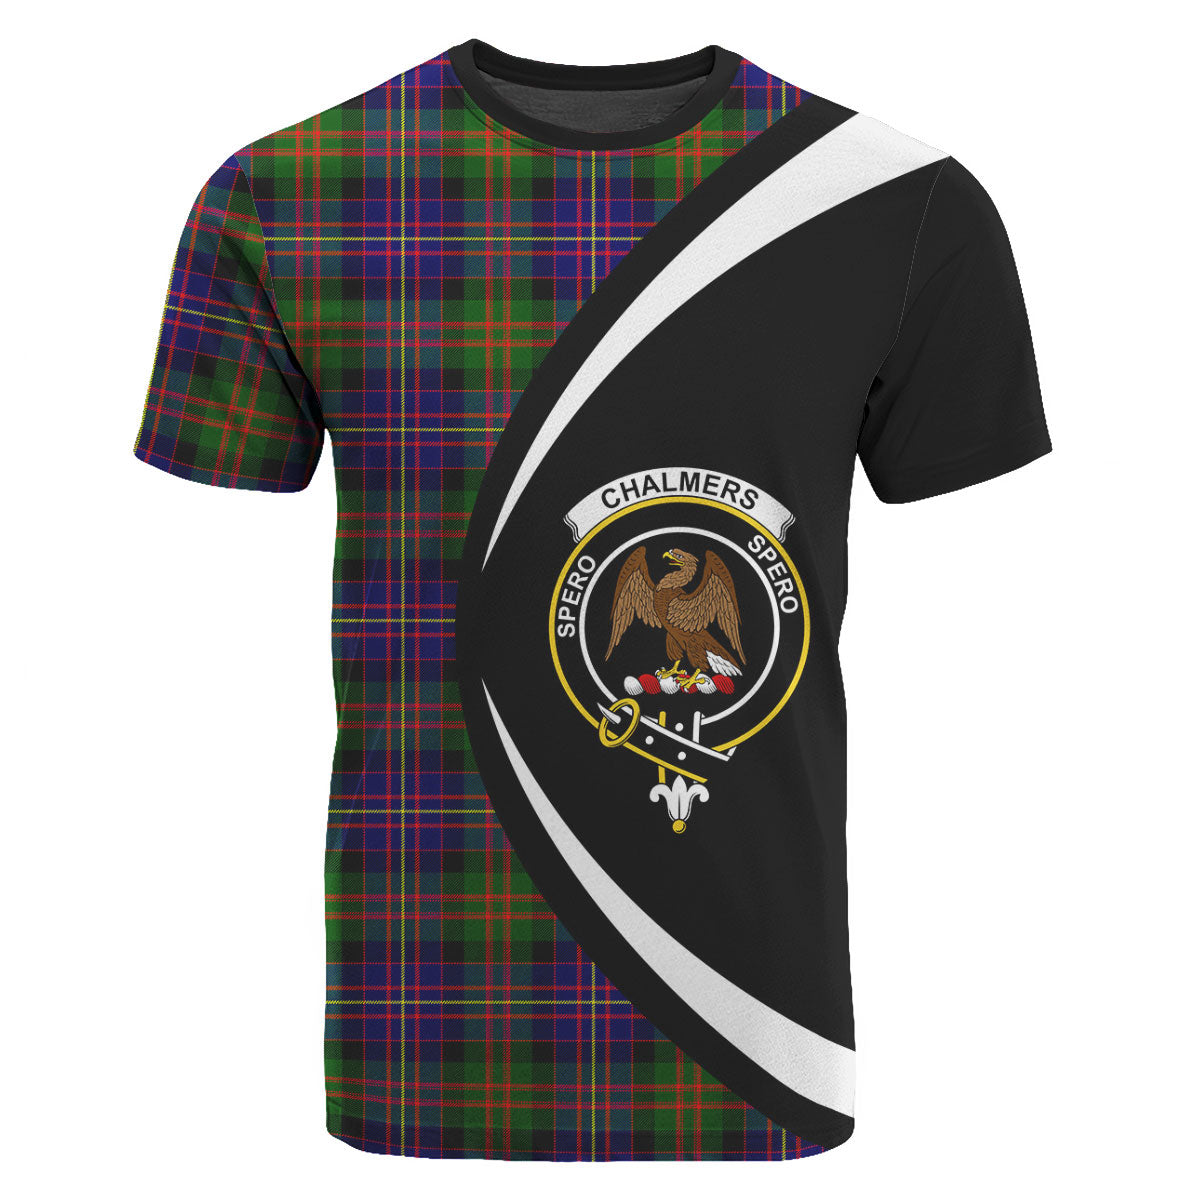 Chalmers (Balnacraig) Tartan Crest T-shirt - Circle Style